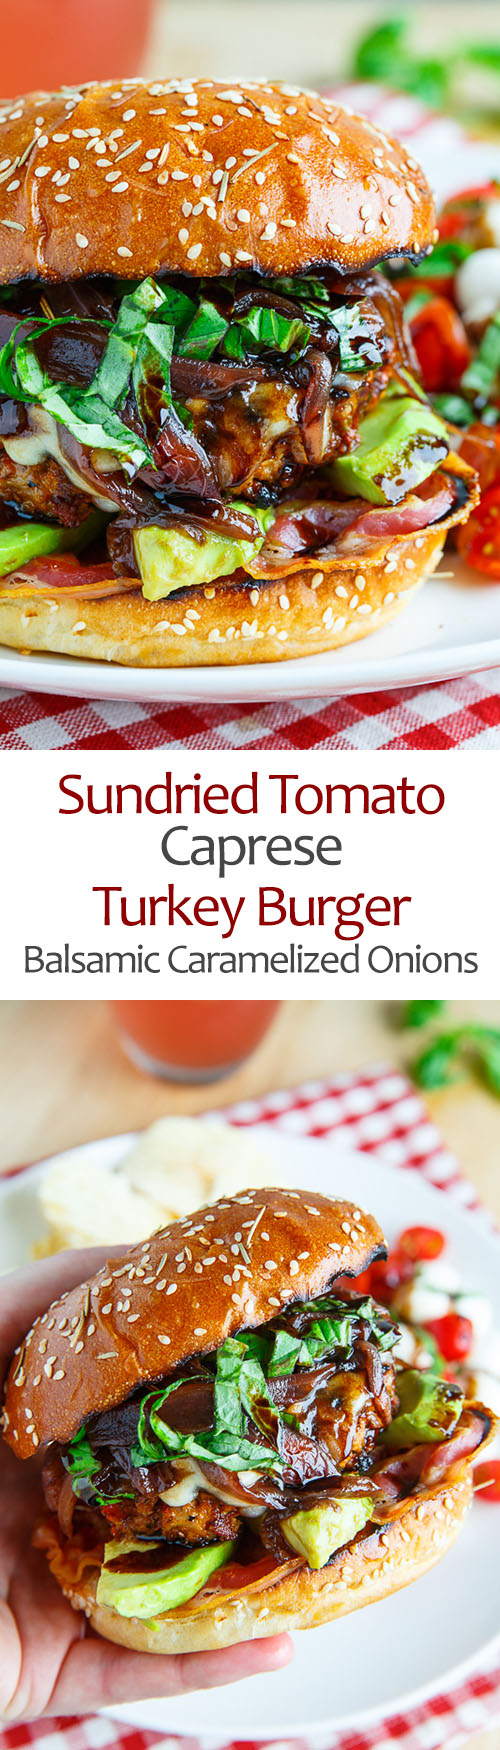 Sundried Tomato Caprese Turkey Burgers with Balsamic Caramelized Onions